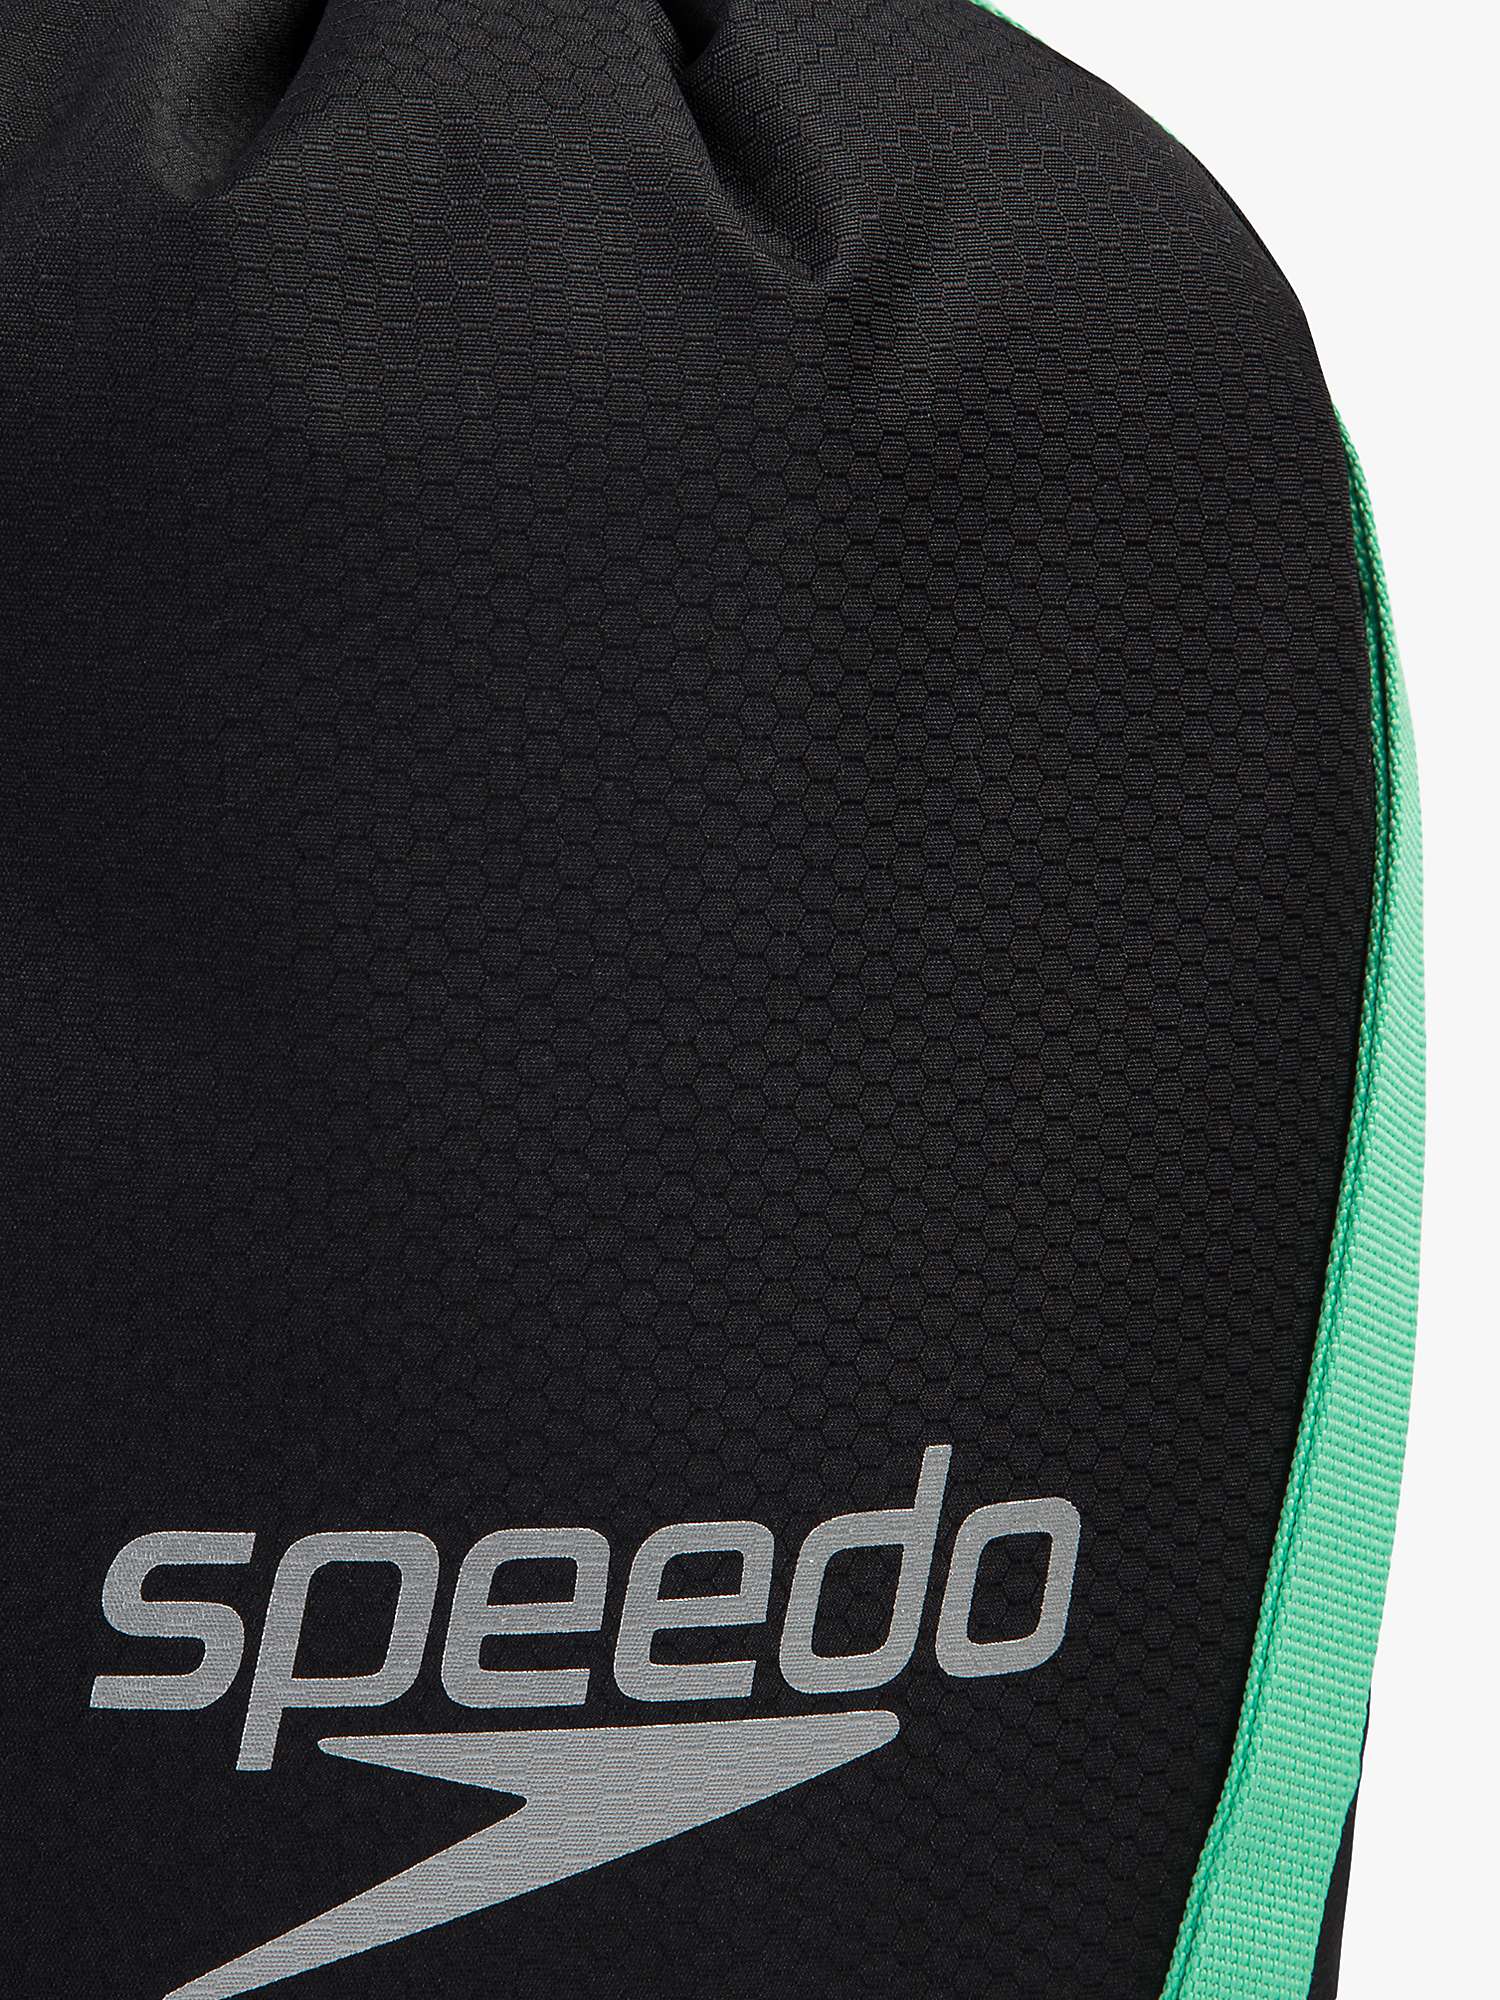 Buy Speedo Pool Bag Online at johnlewis.com